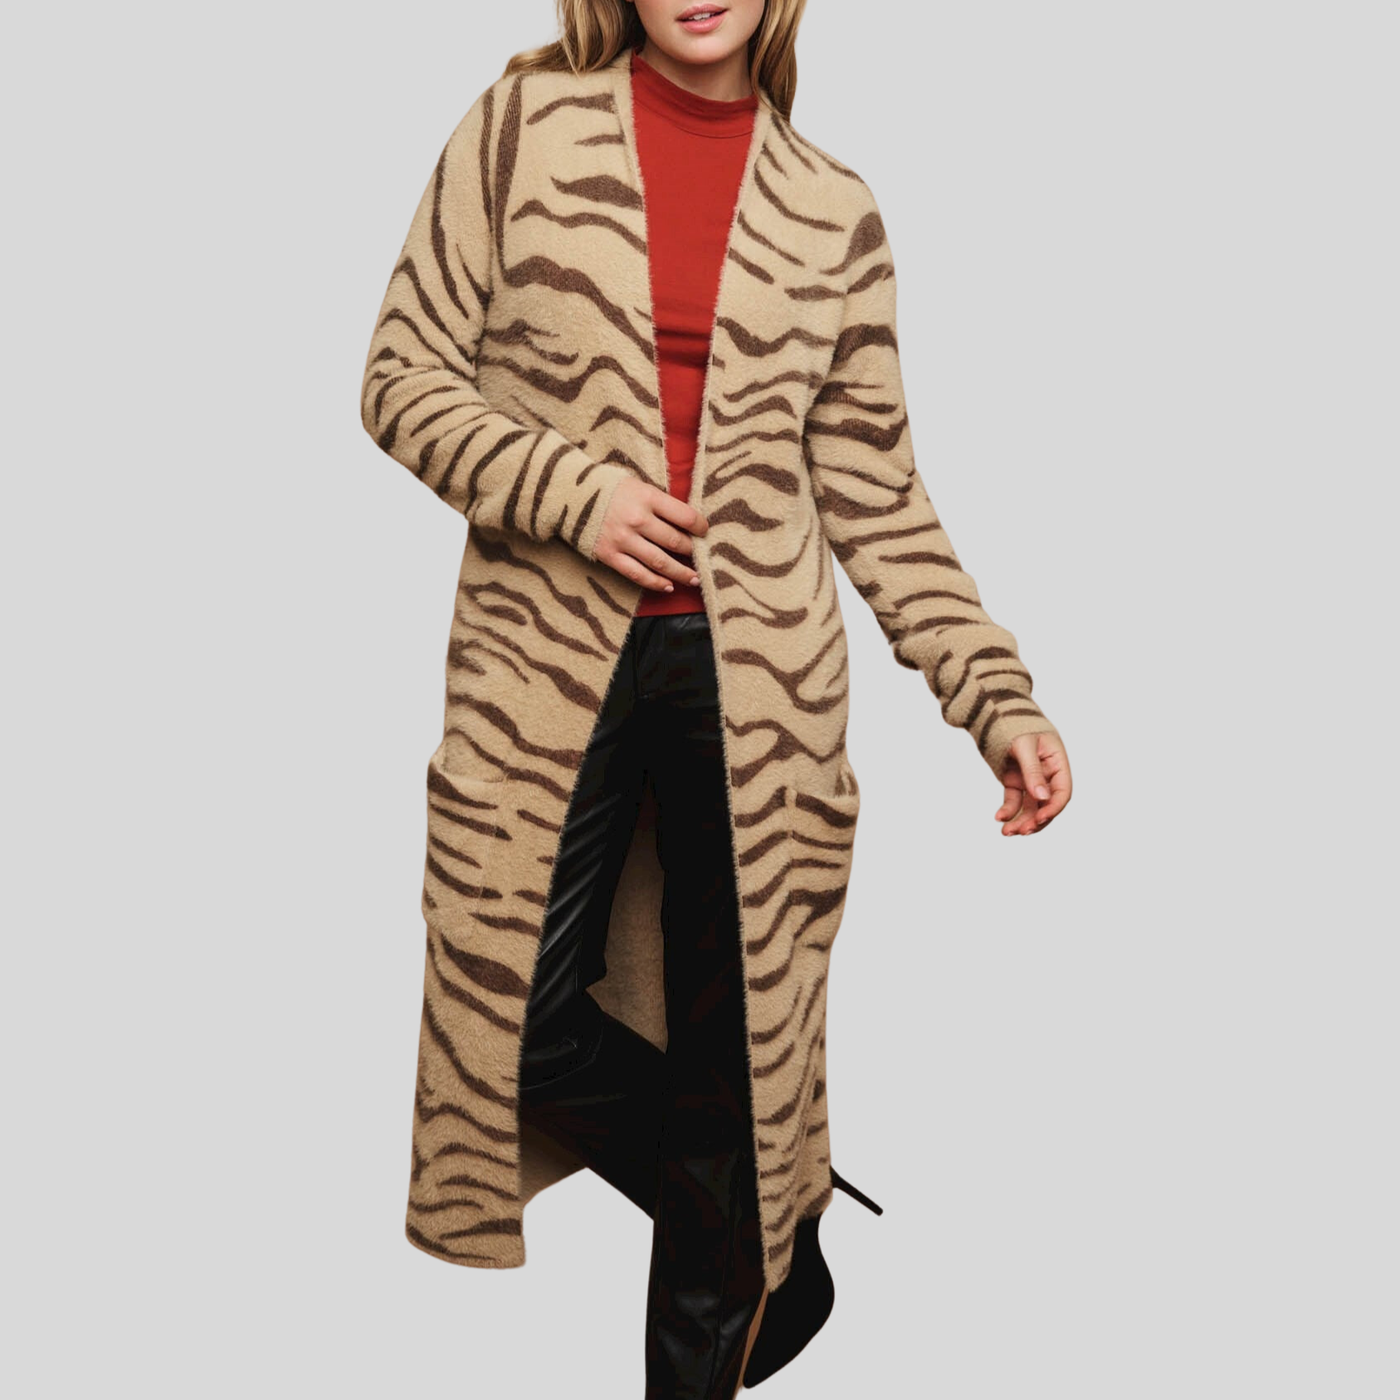 Gotstyle Fashion - Rino and Pelle Sweaters Zebra Print Long Open Cardigan - Tan